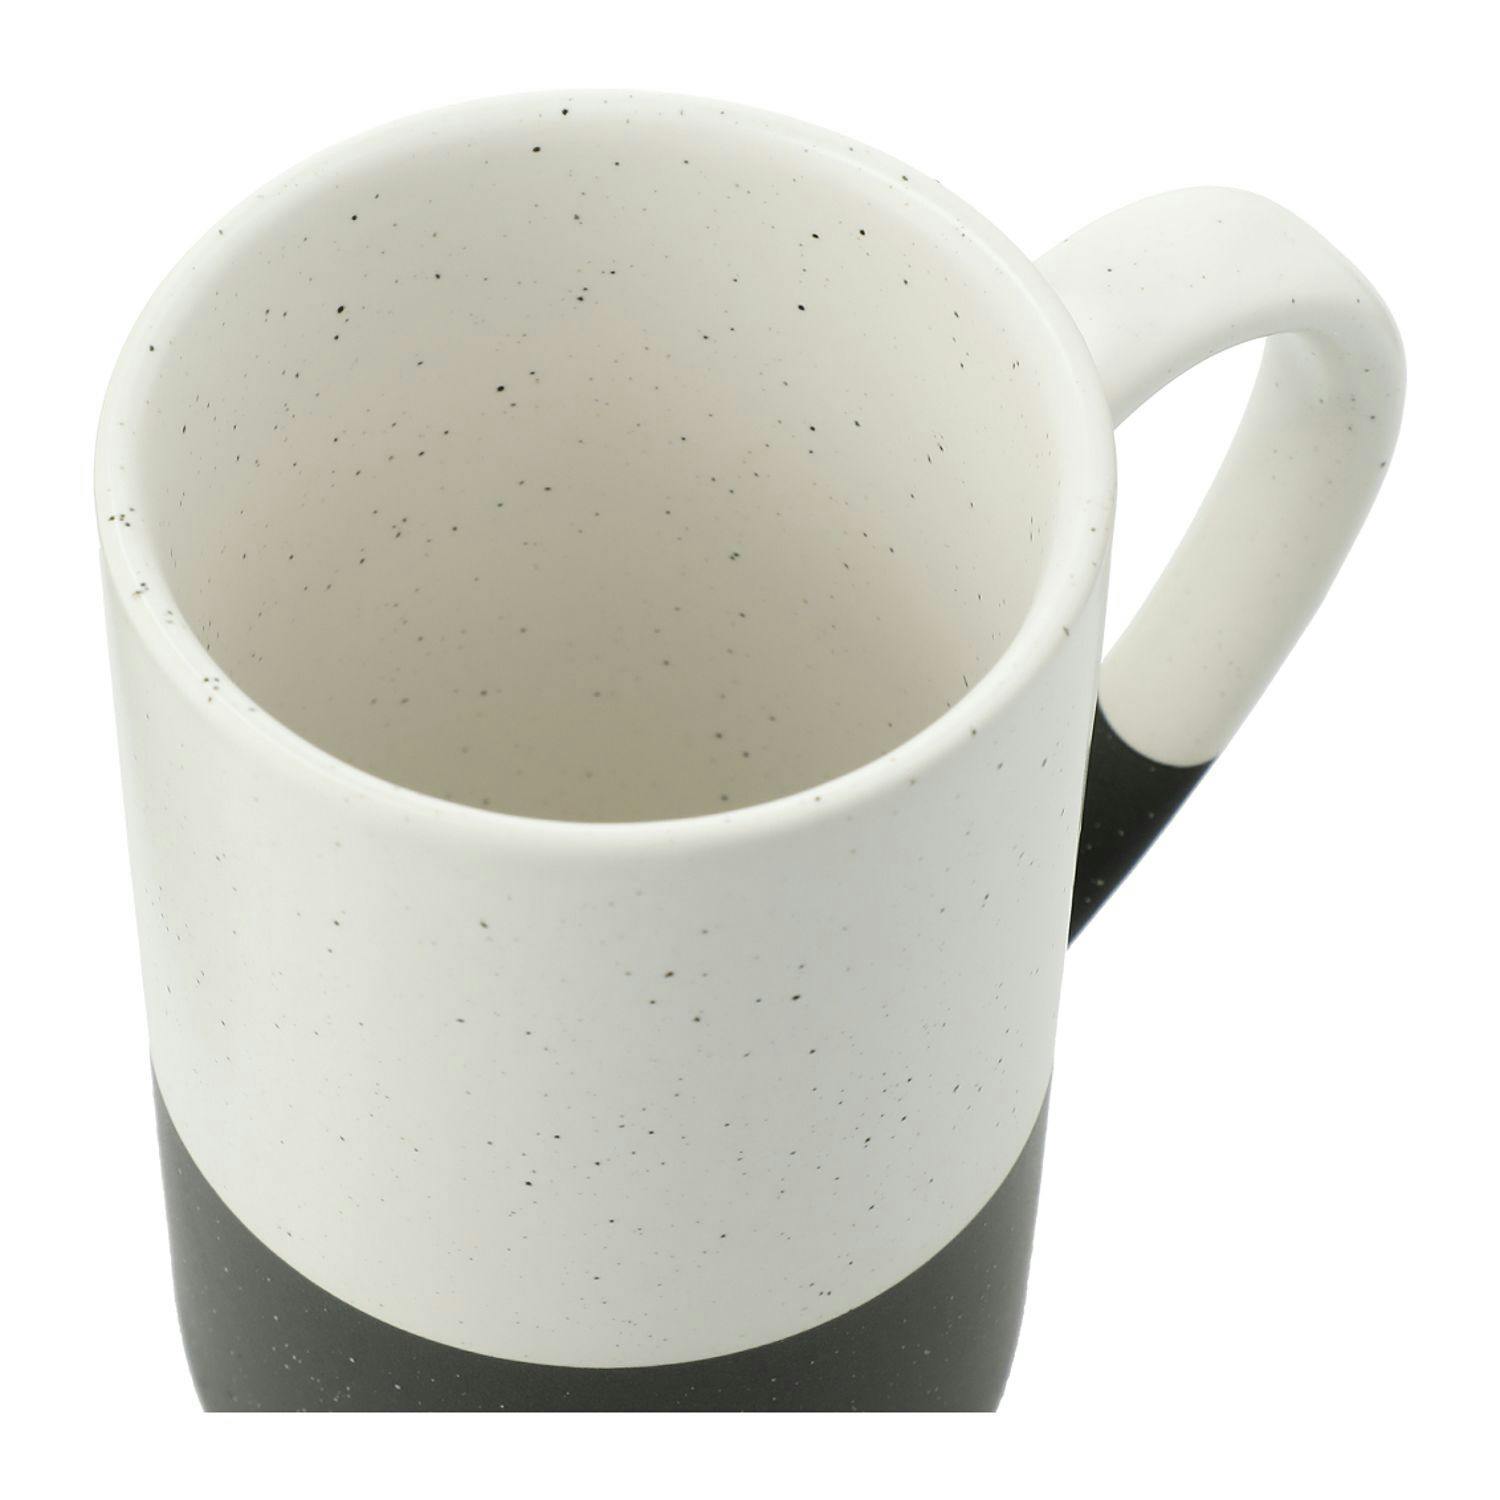 Speckled Wayland Ceramic Mug 13oz - additional Image 1